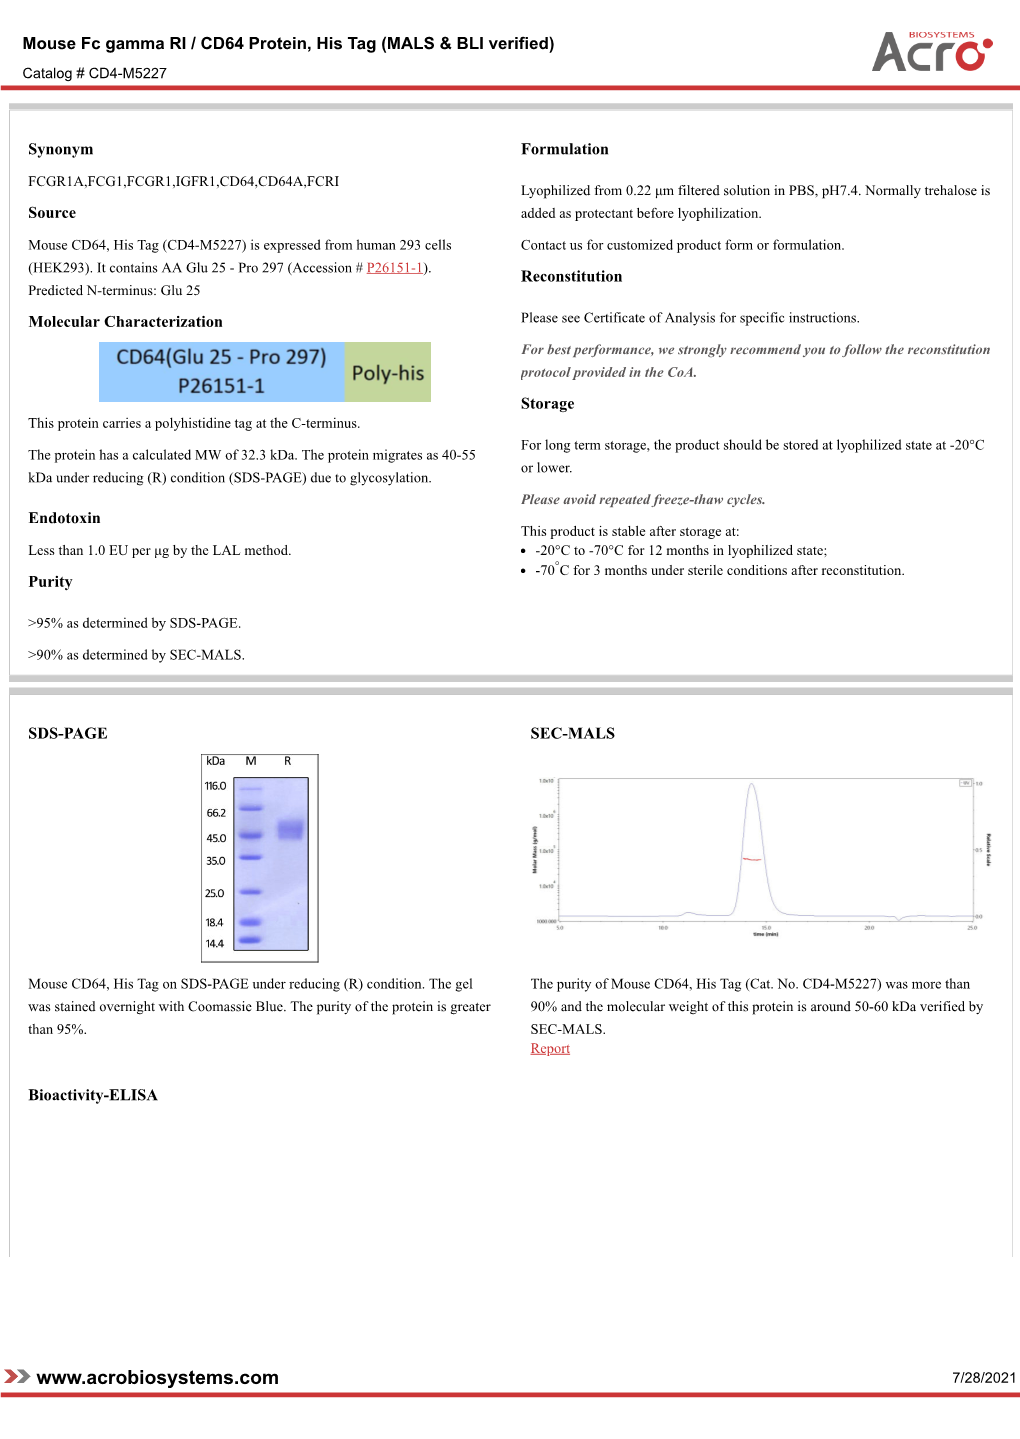 Mouse Fc Gamma RI / CD64 Protein, His Tag (MALS & BLI Verified)